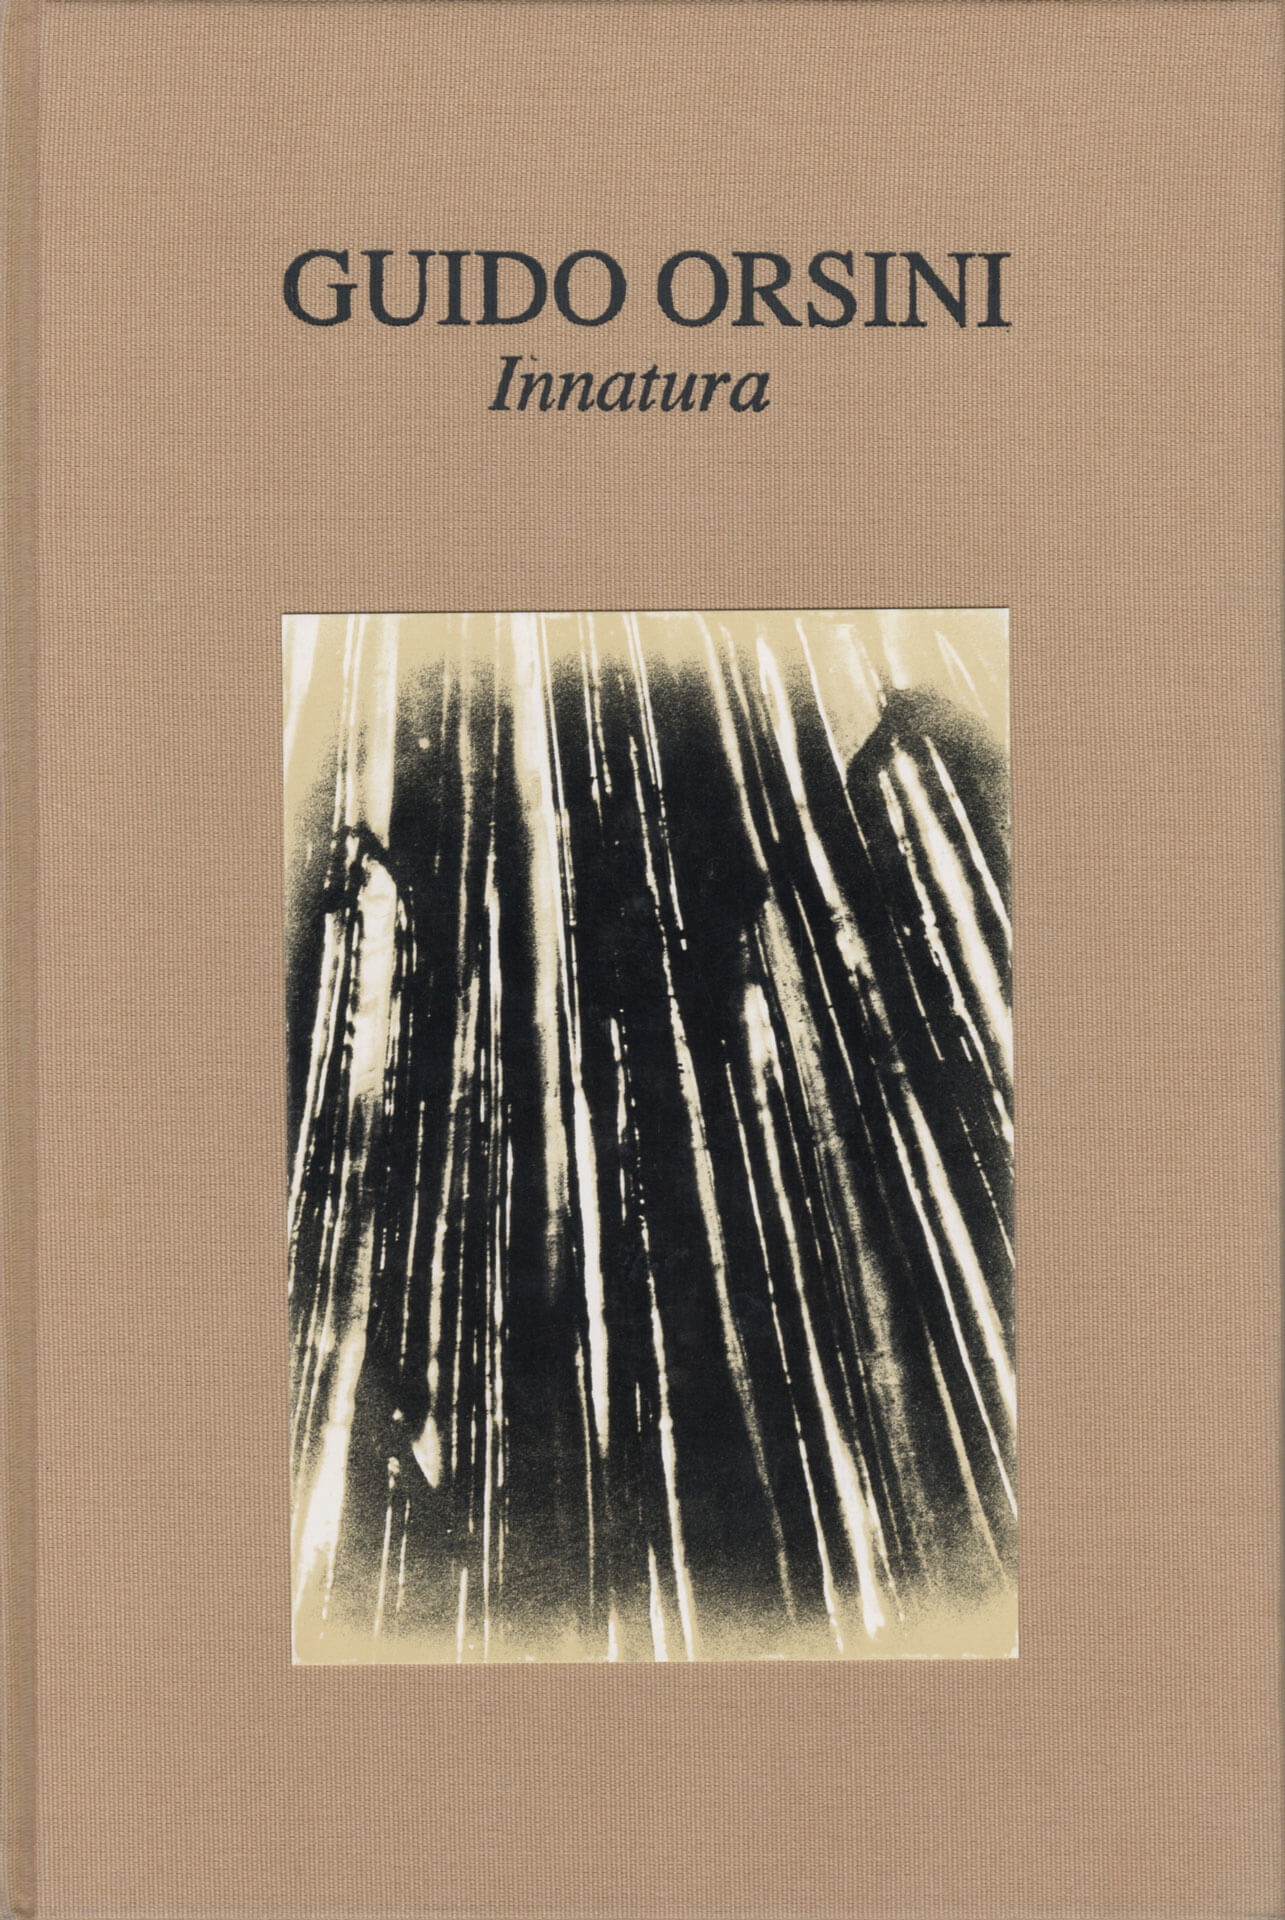 Studio Stefania Miscetti | Catalogues | Guido Orsini | Innatura